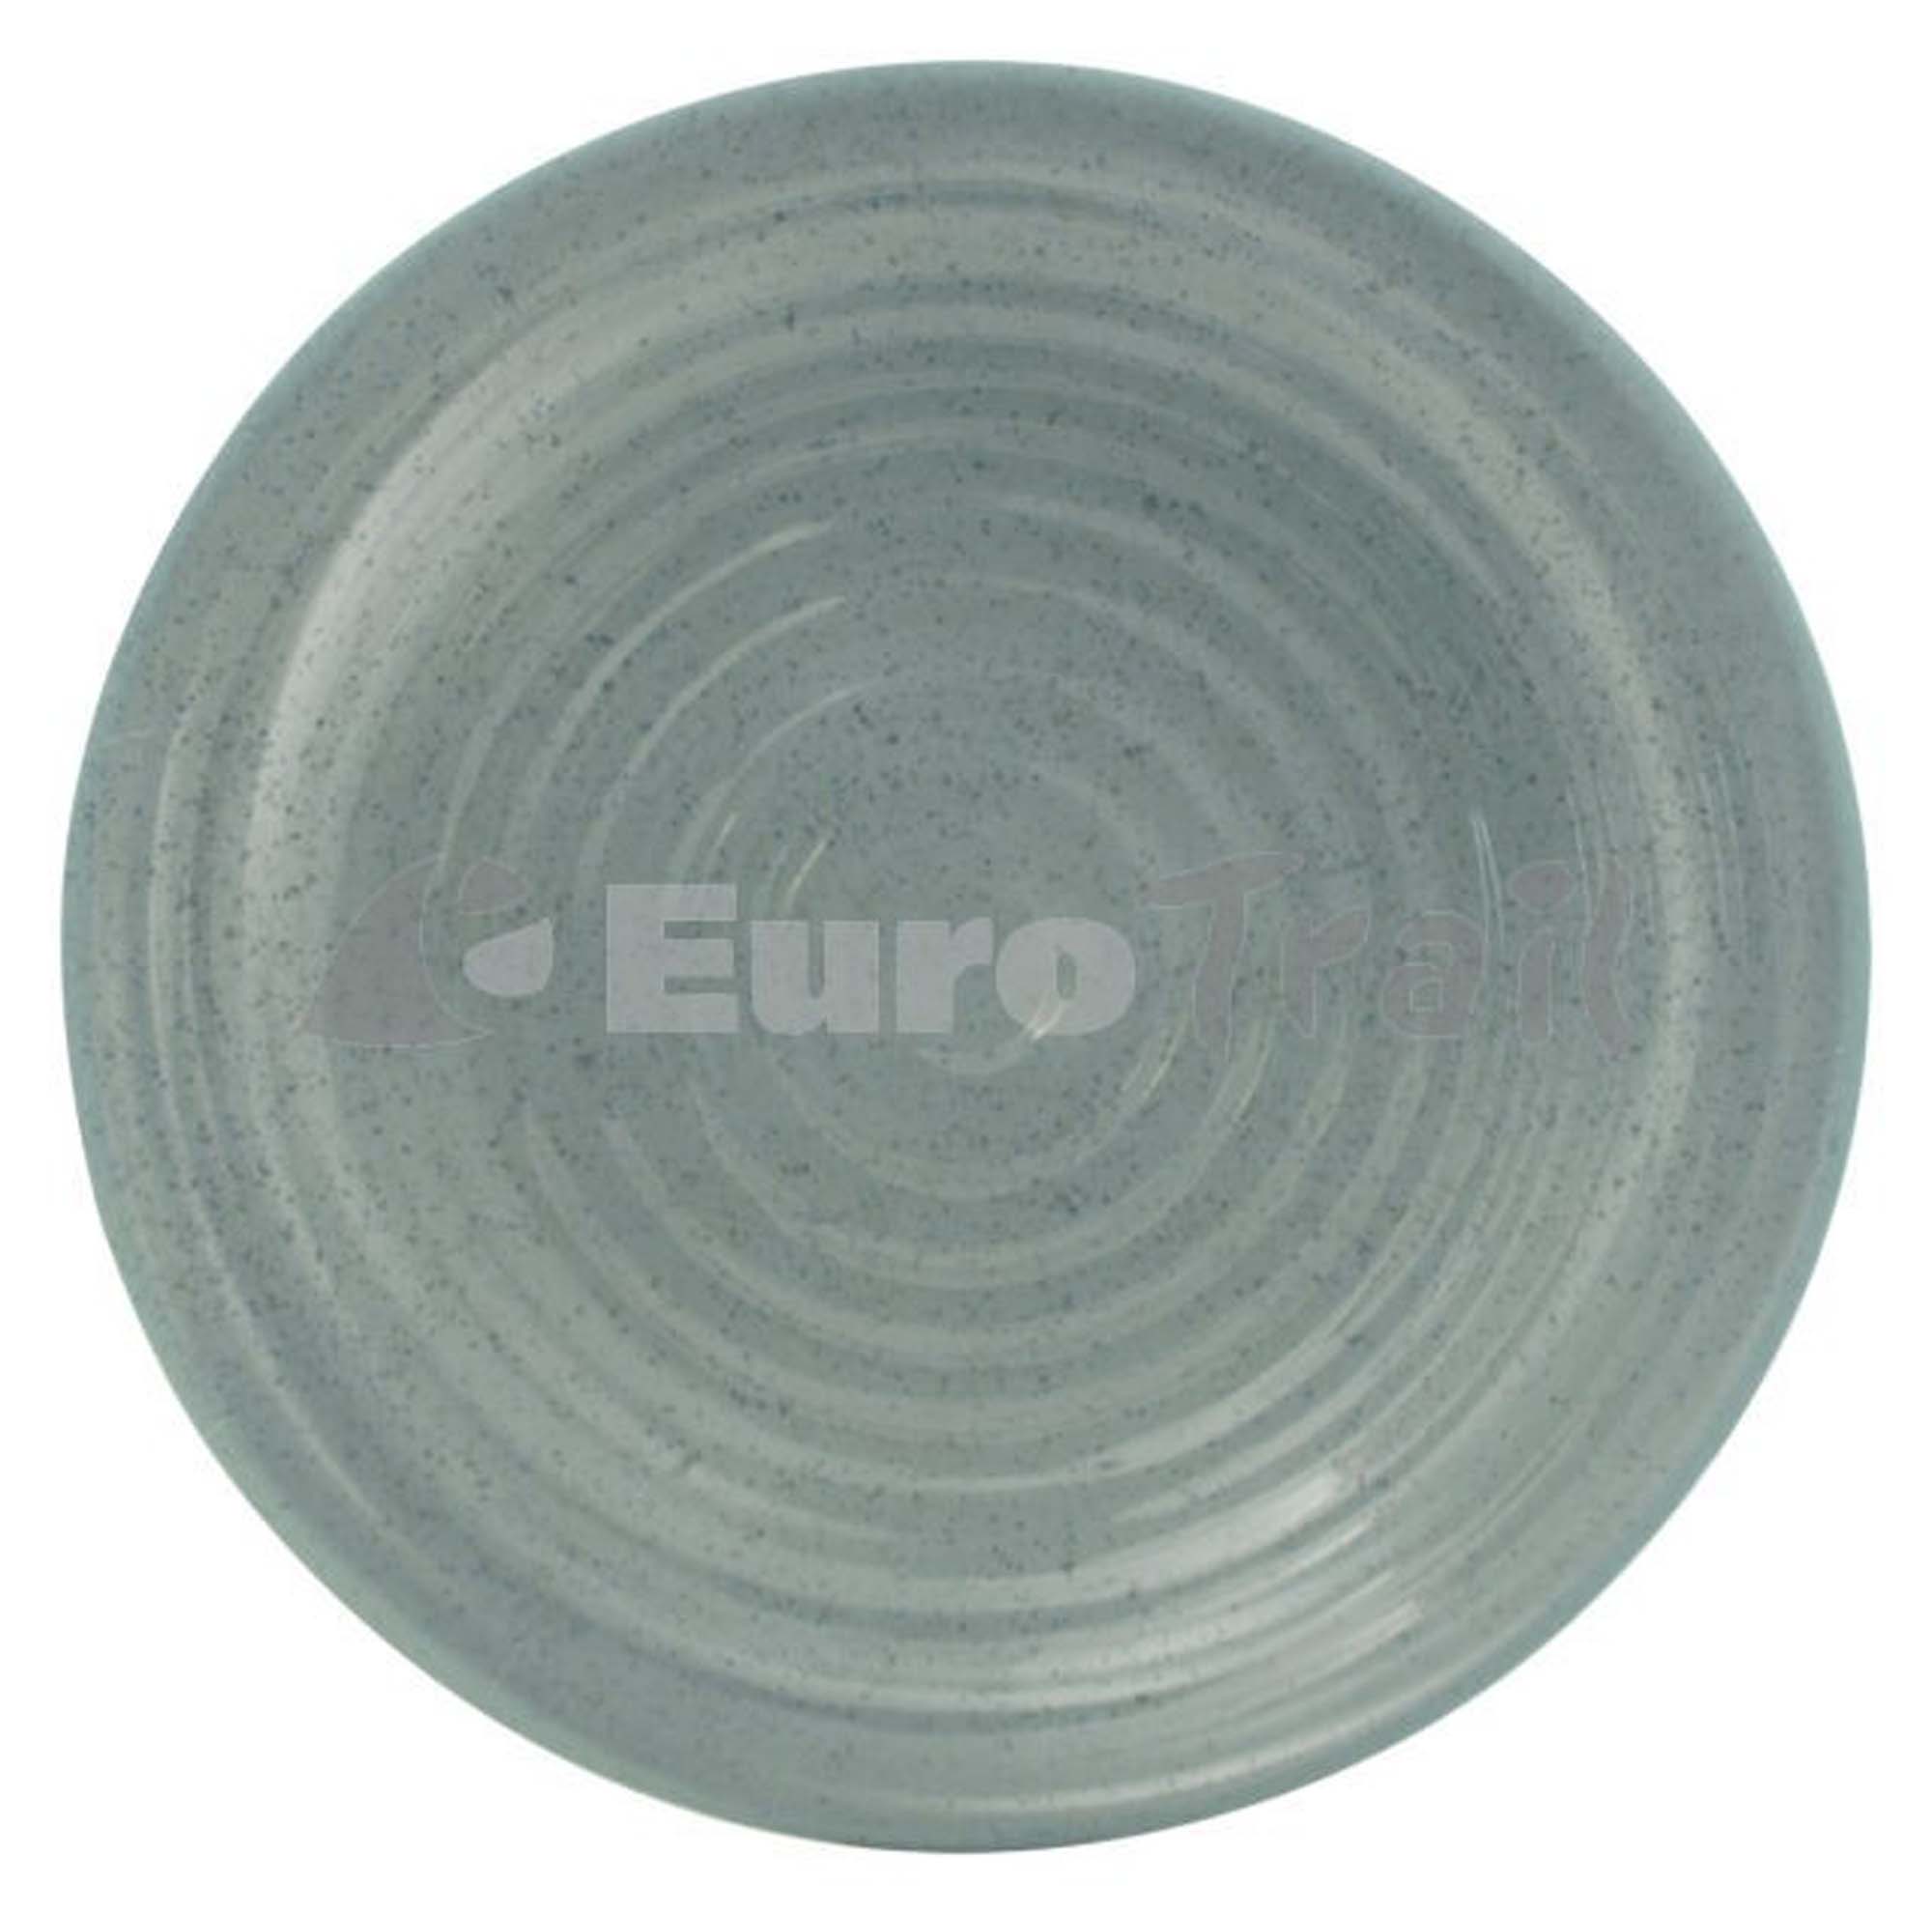 EUROTRAIL Denia Plat Bord 26,5 cm